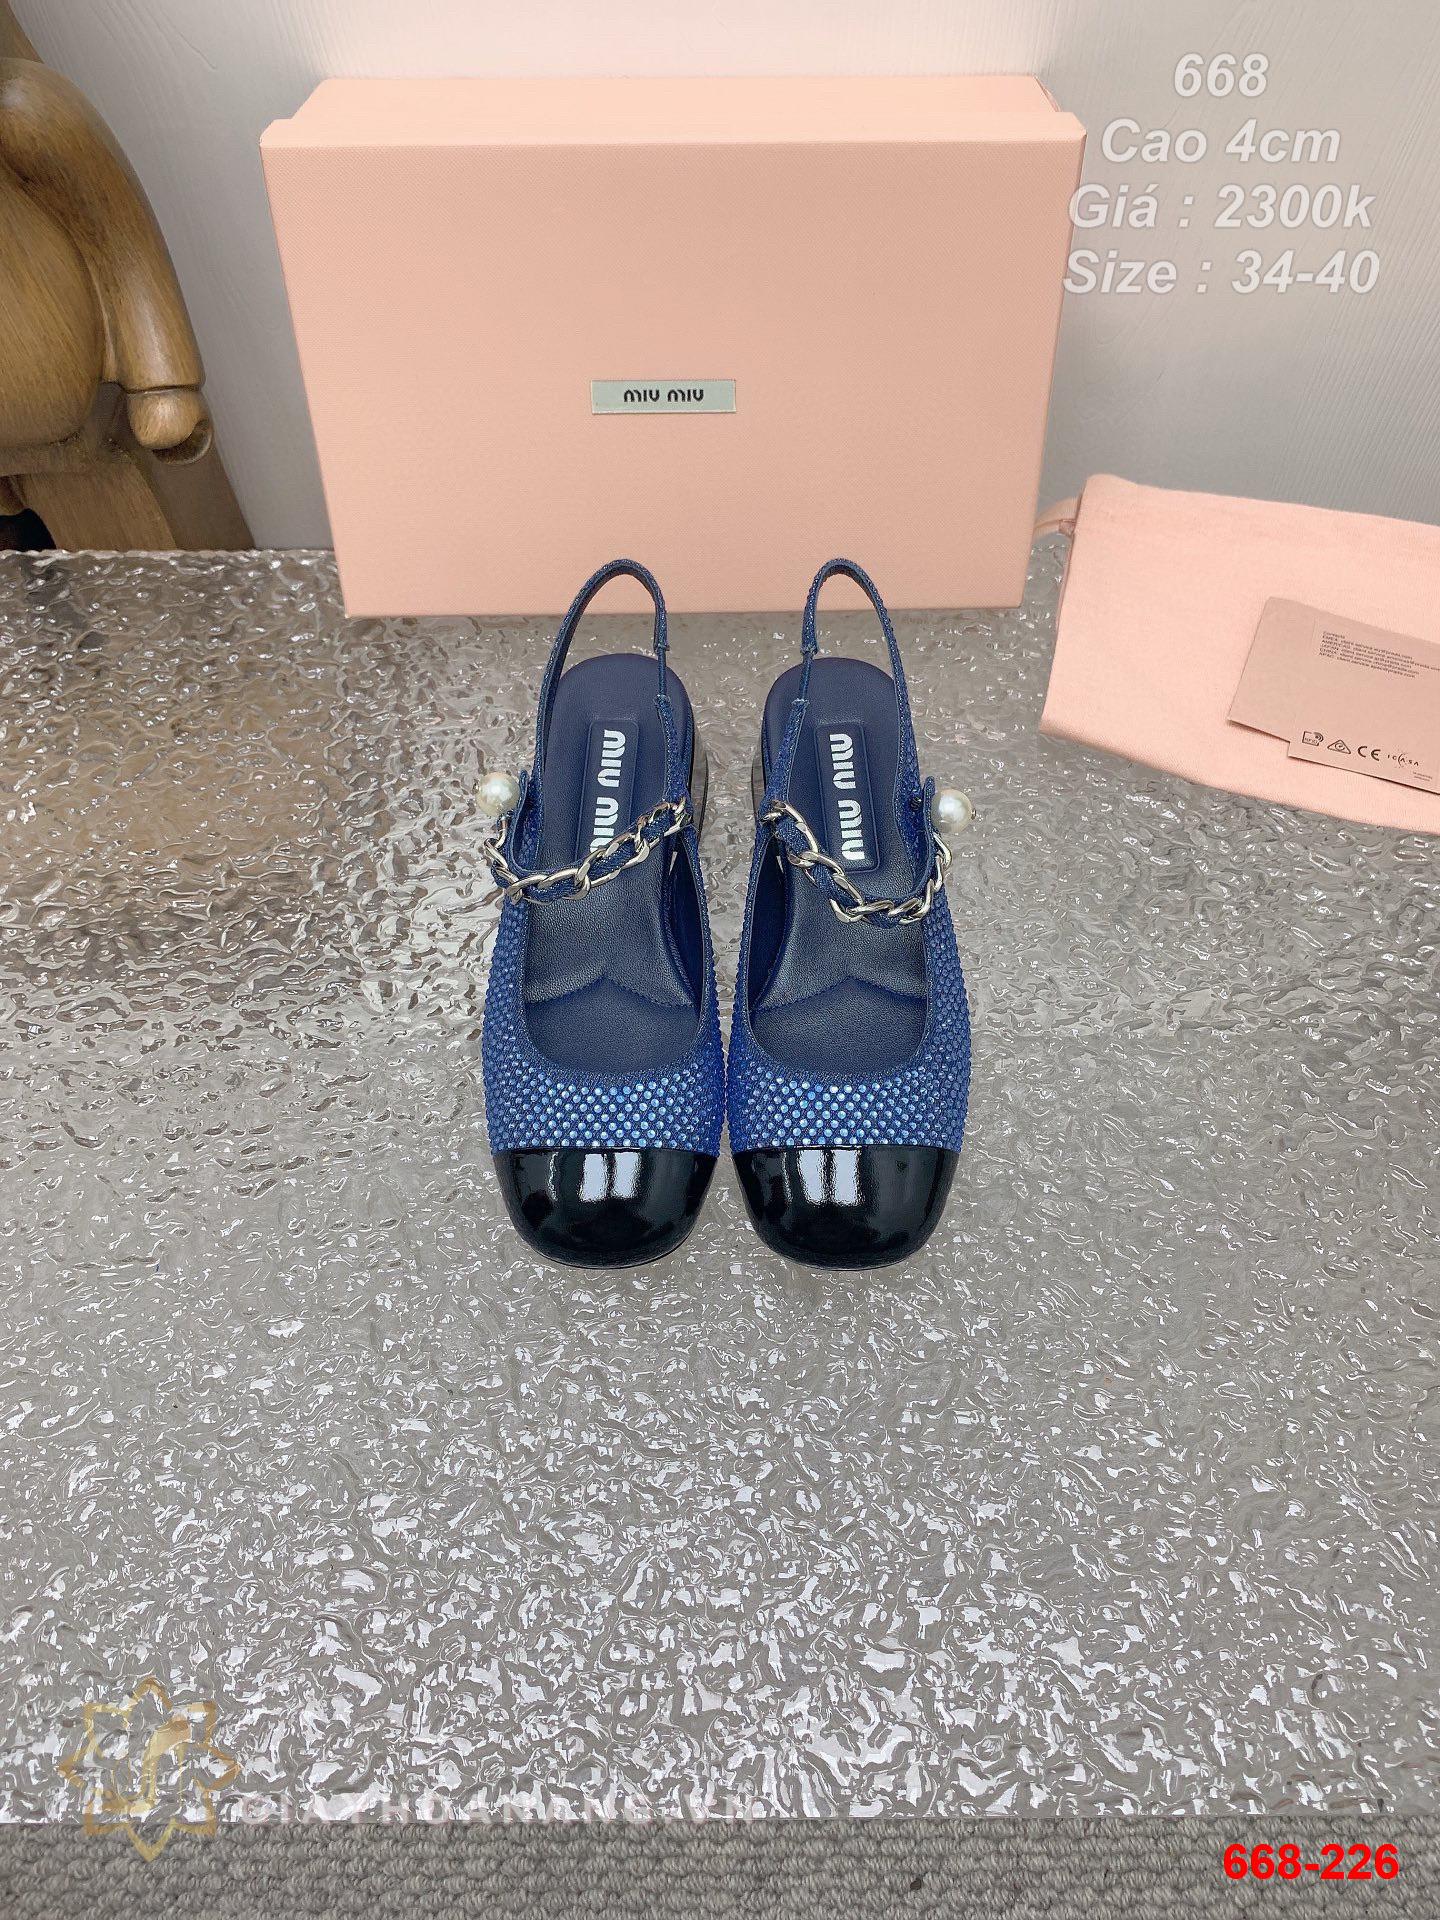 668-226 Miu Miu sandal cao 4cm siêu cấp